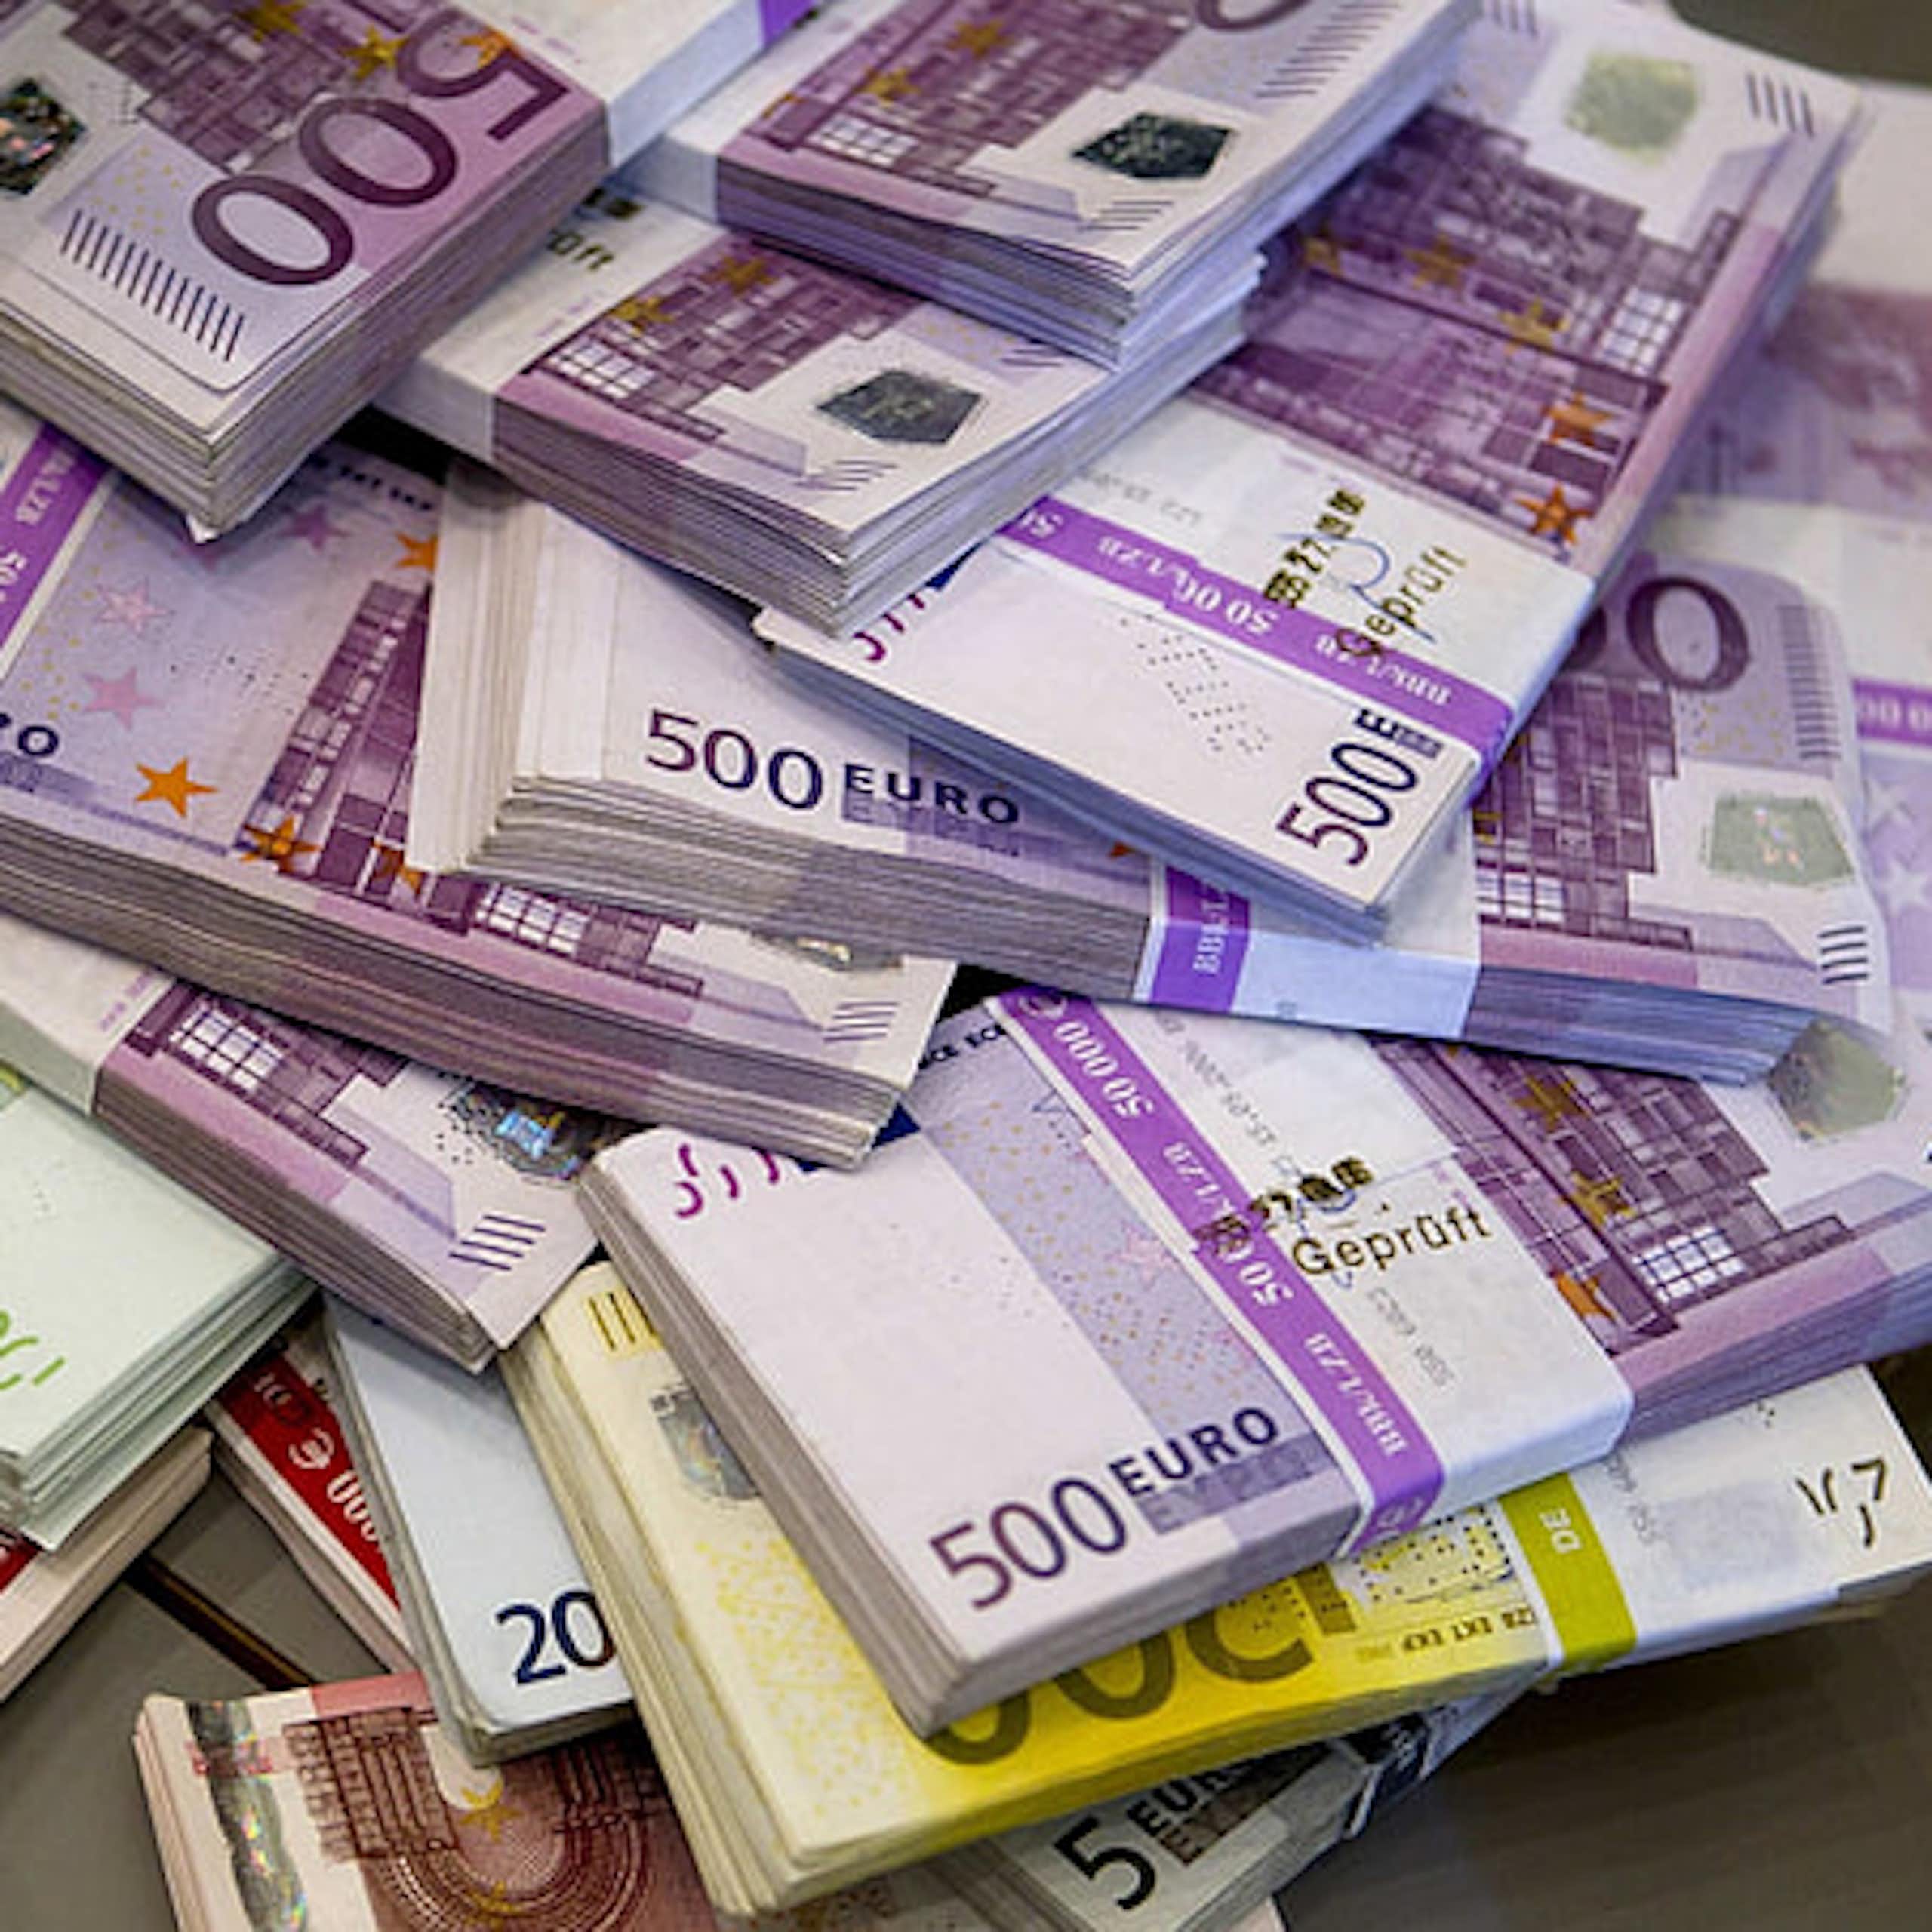 Grooses coupures d'euros